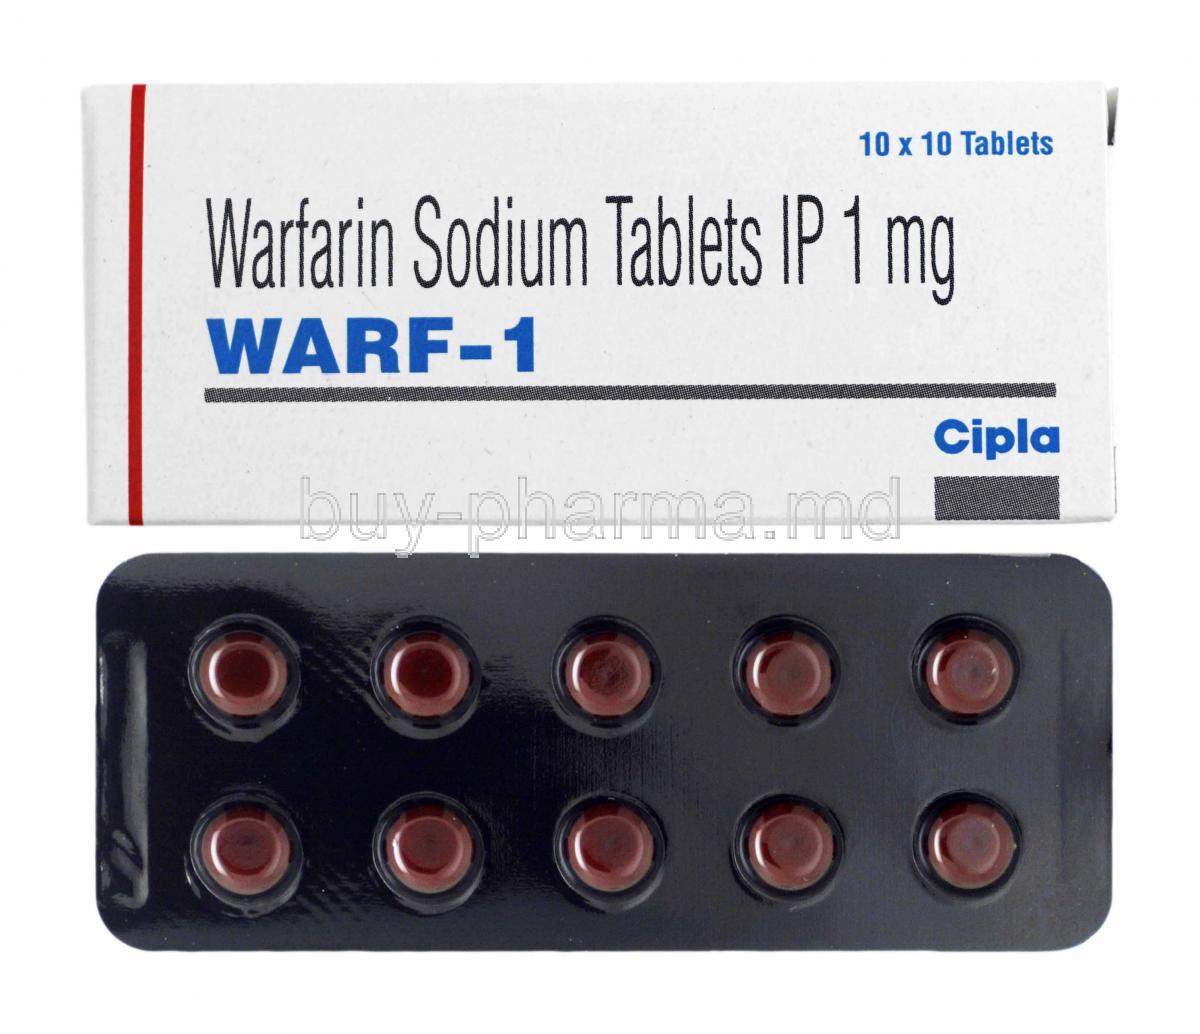 Warf, Warfarin 1mg box and tablets